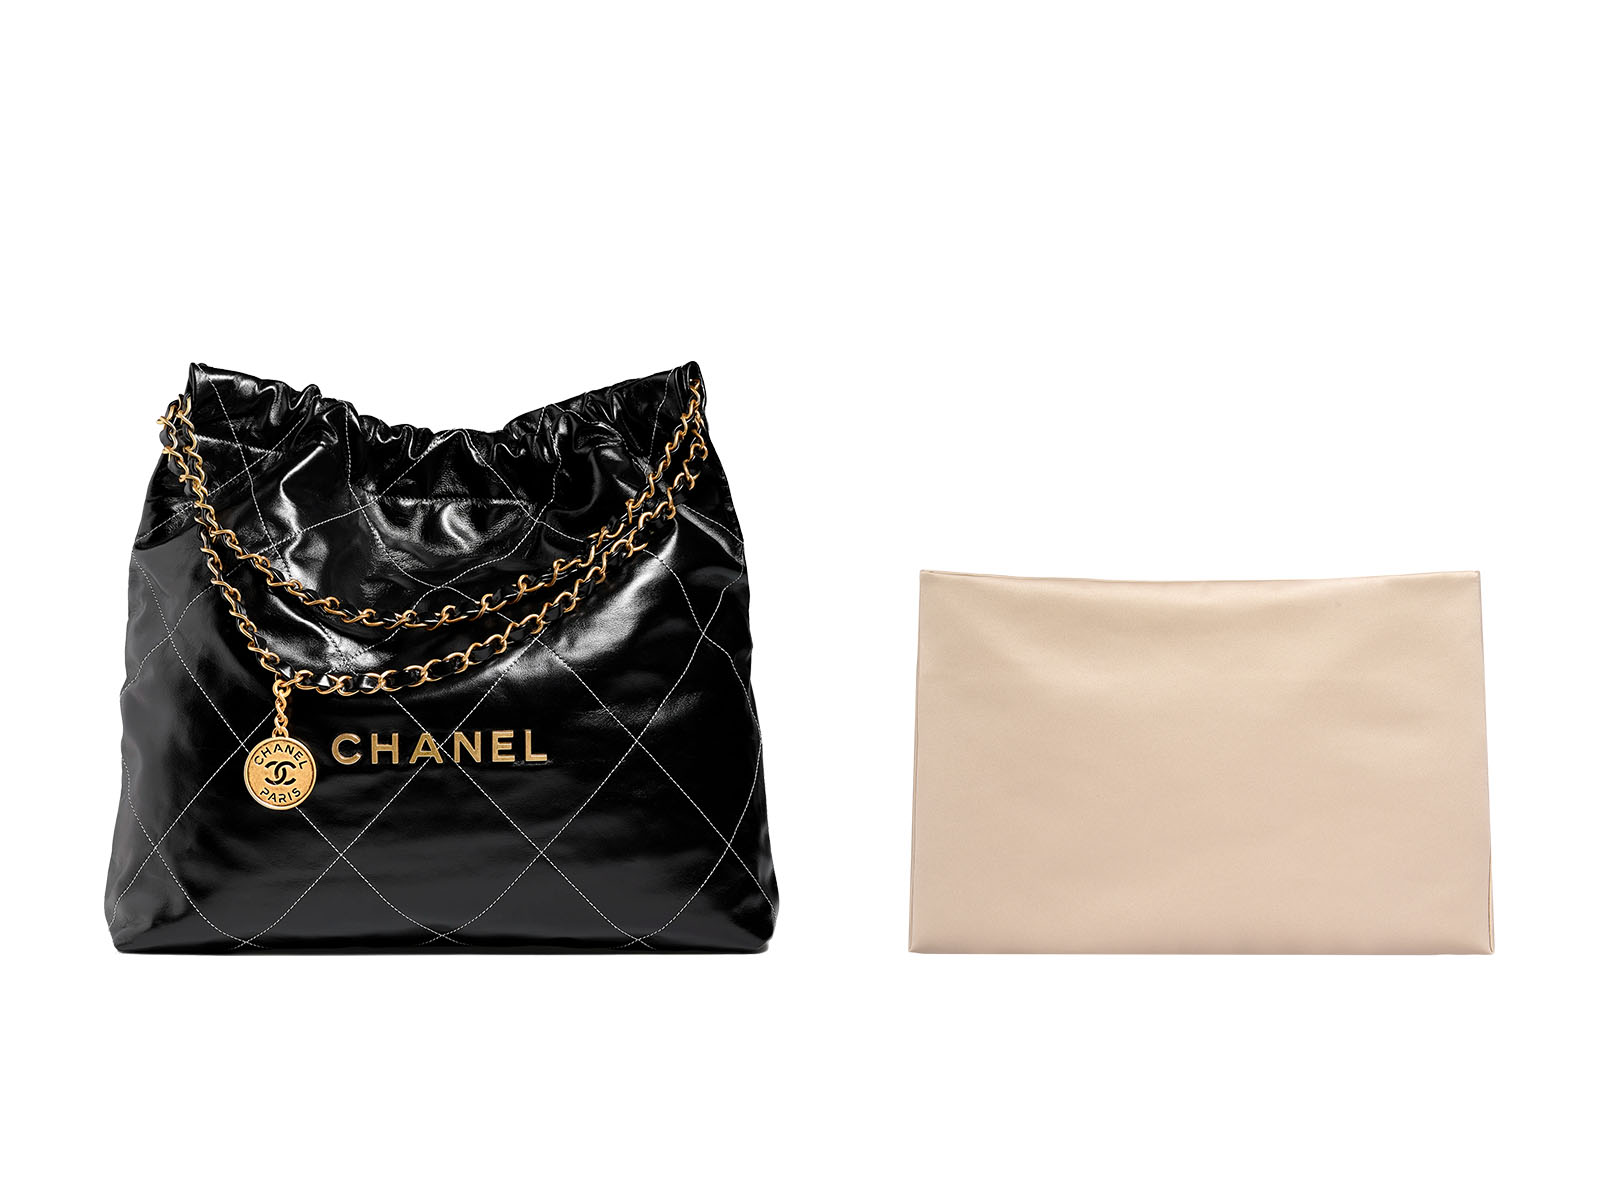 Chanel 22 小號專用喬莉包內袋